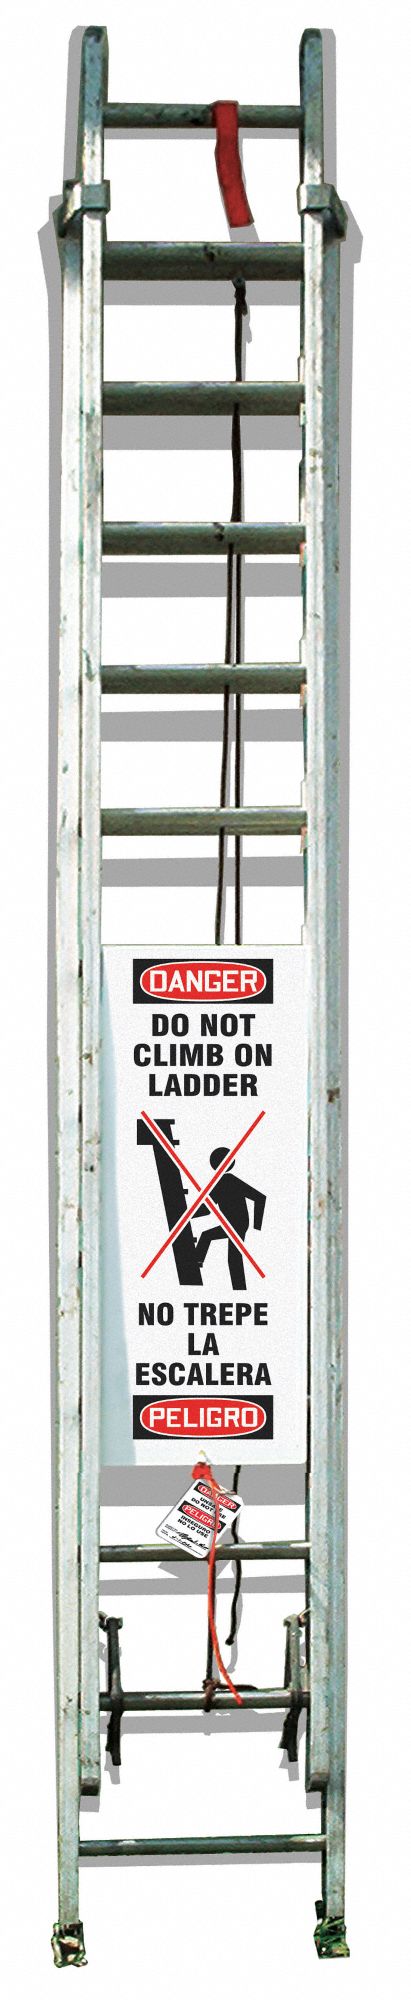 Accuform Ladder Climb Preventer 3wpf9 Klb426 Grainger